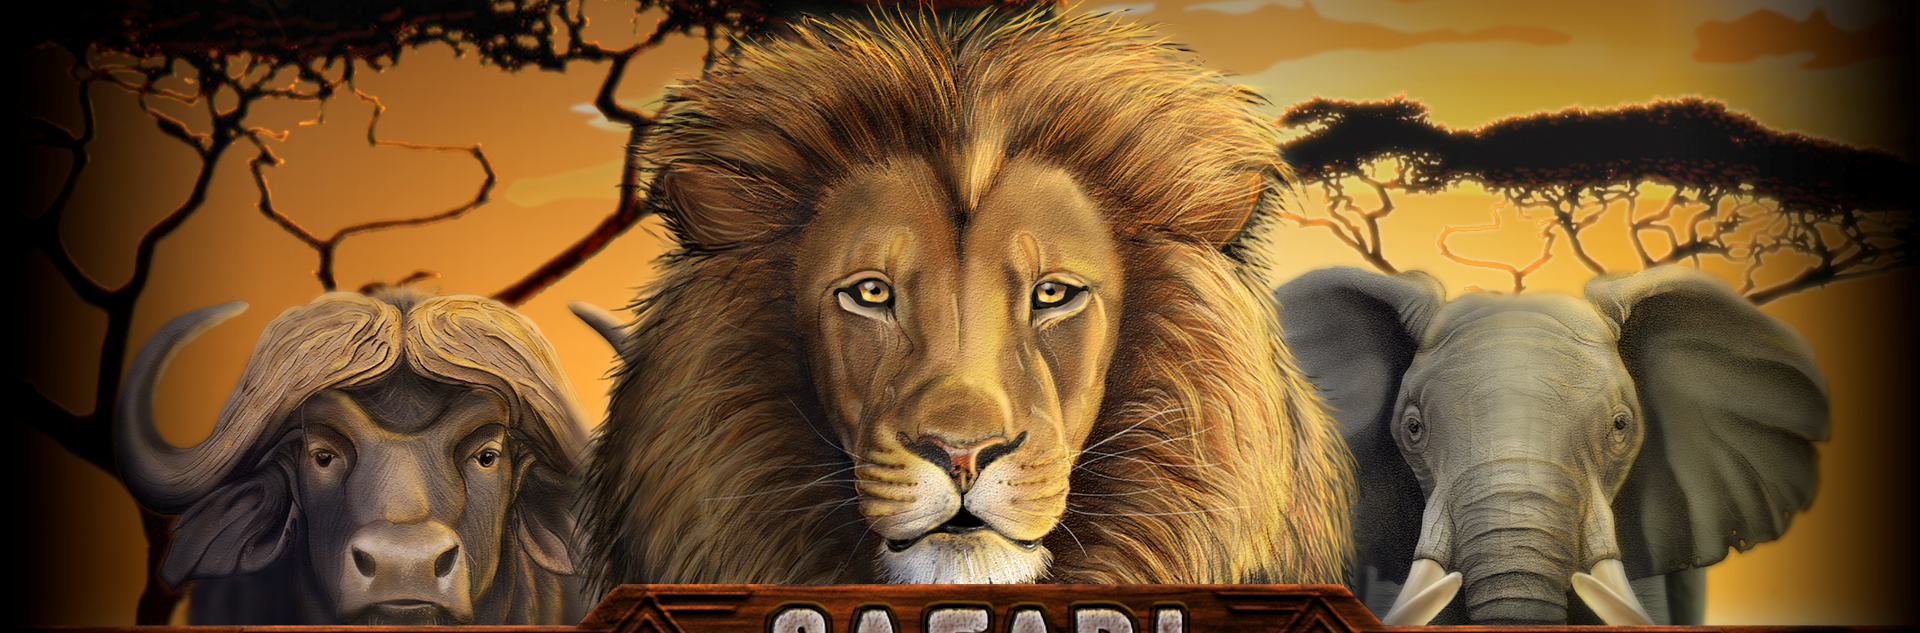 Play Safari Free Slot